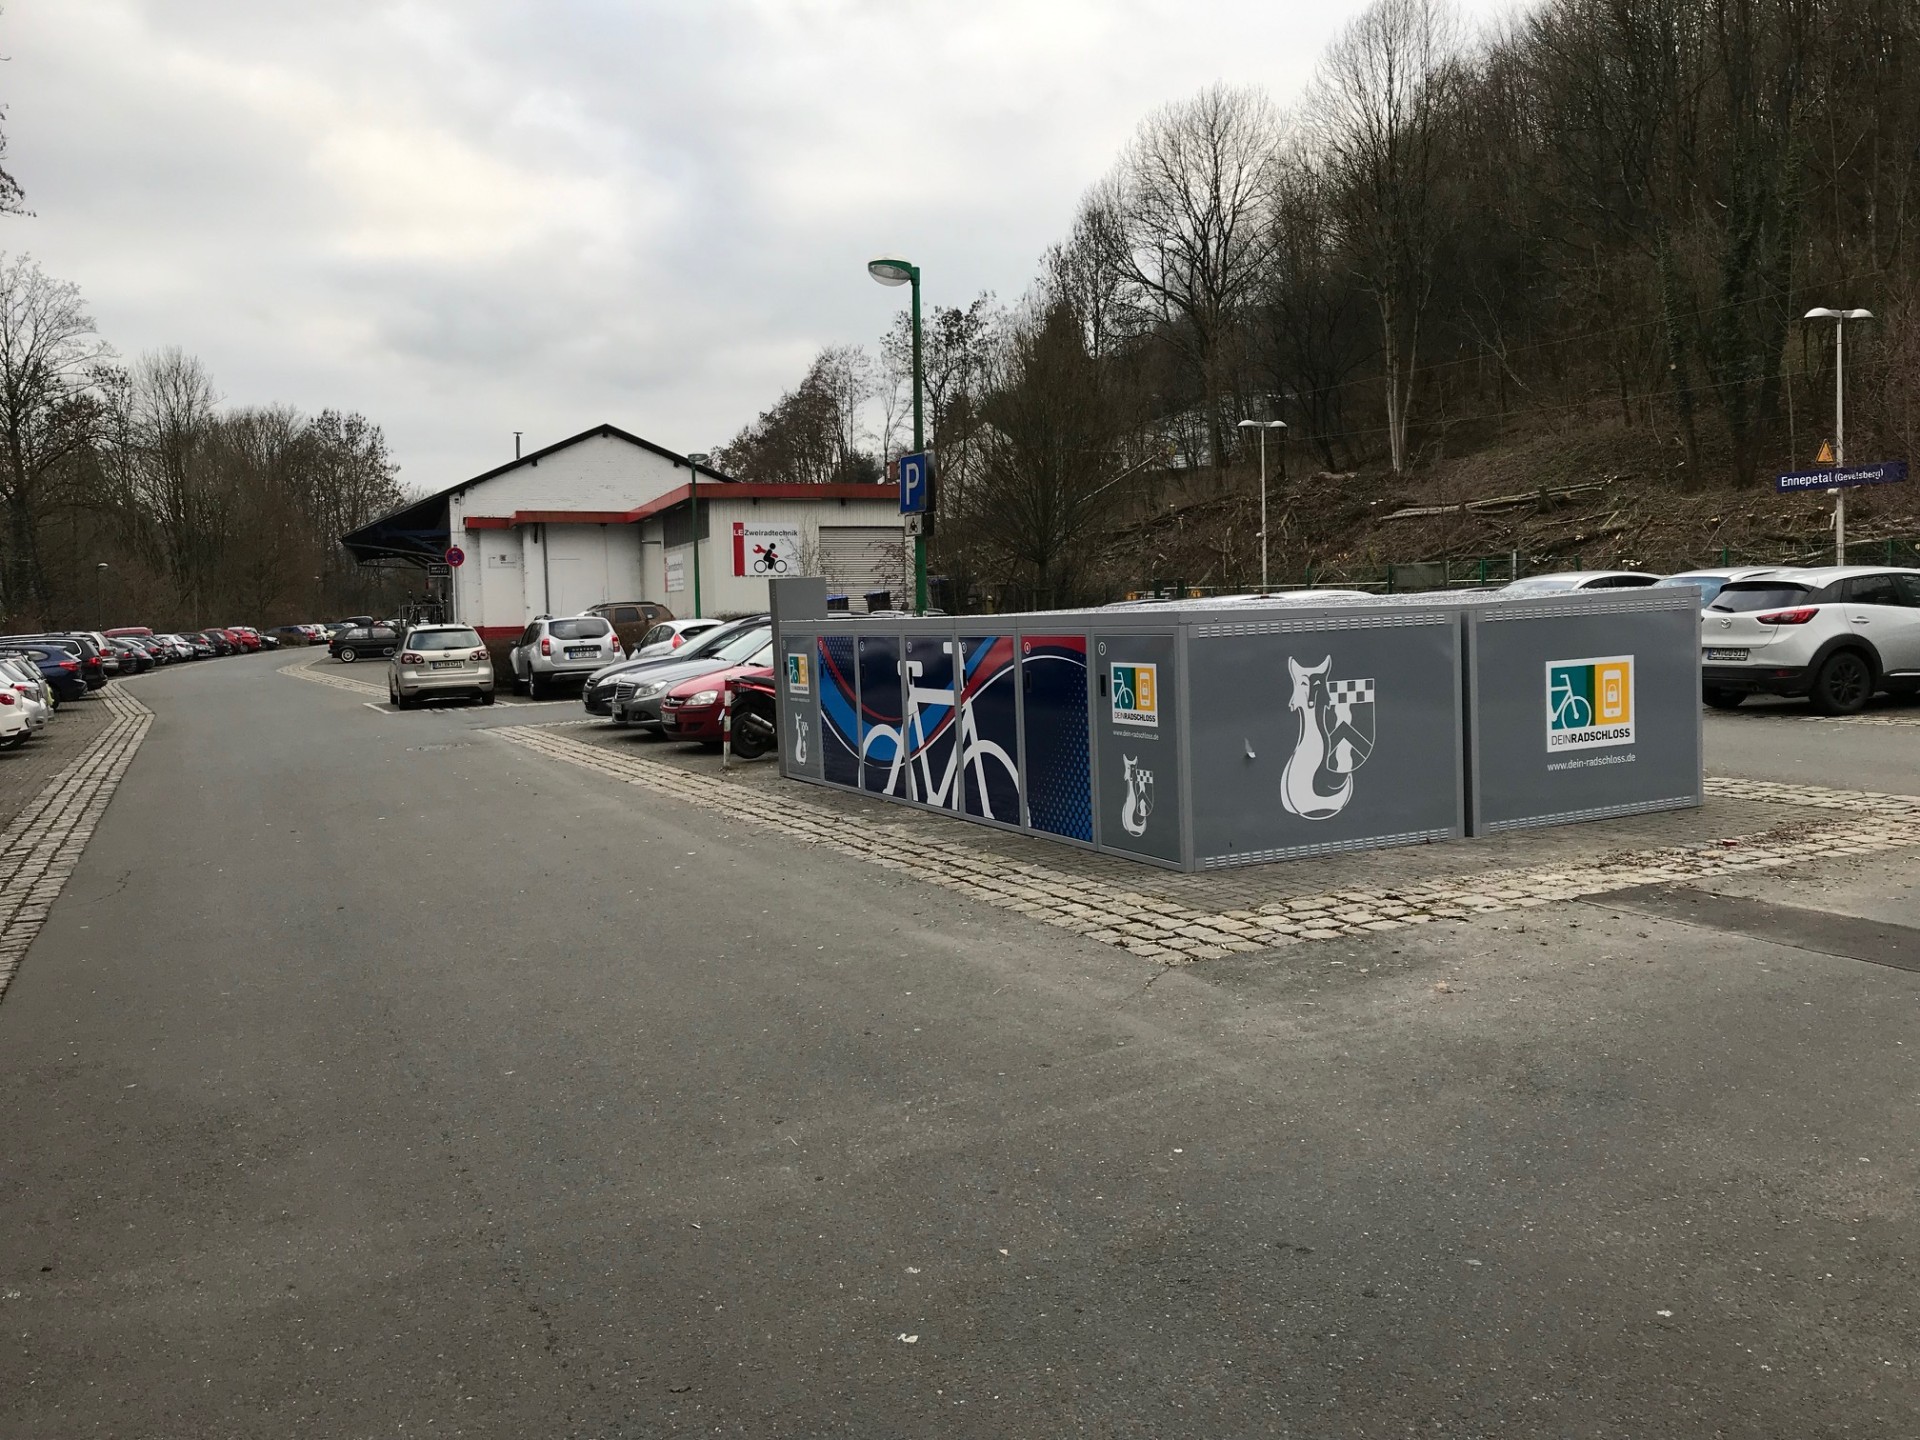 DeinRadschloss Fahrradboxen am Bahnhof in Ennepetal